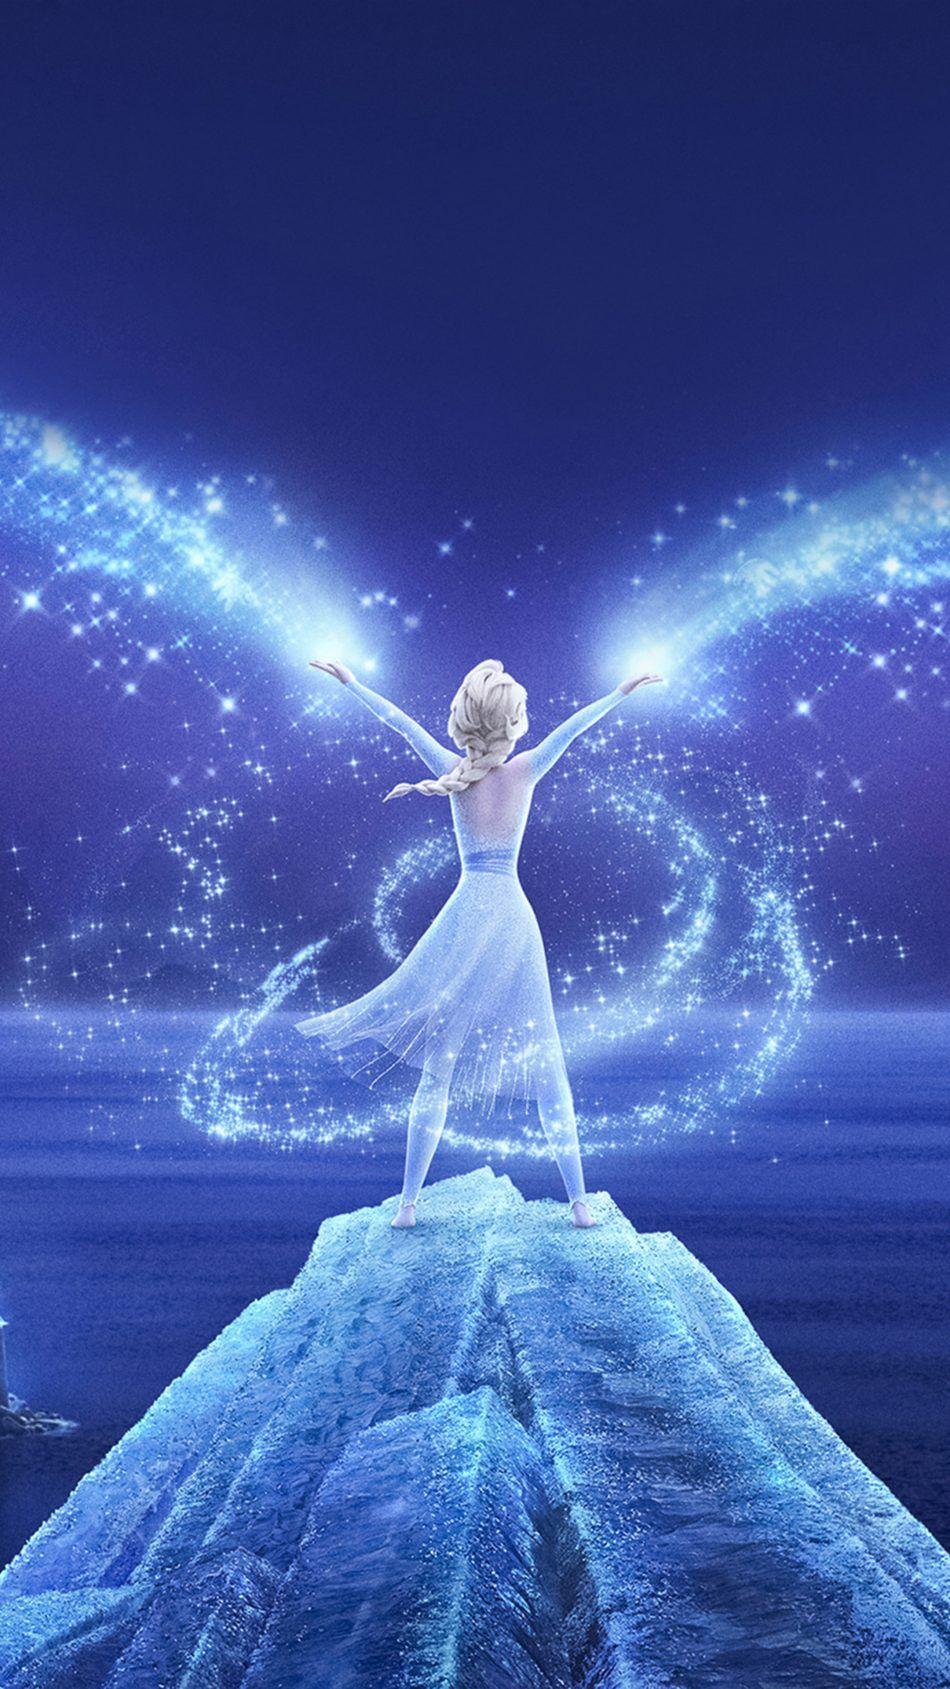 Queen Elsa Frozen 2 2019. ディズニー 可愛い 壁紙, ディズニーの